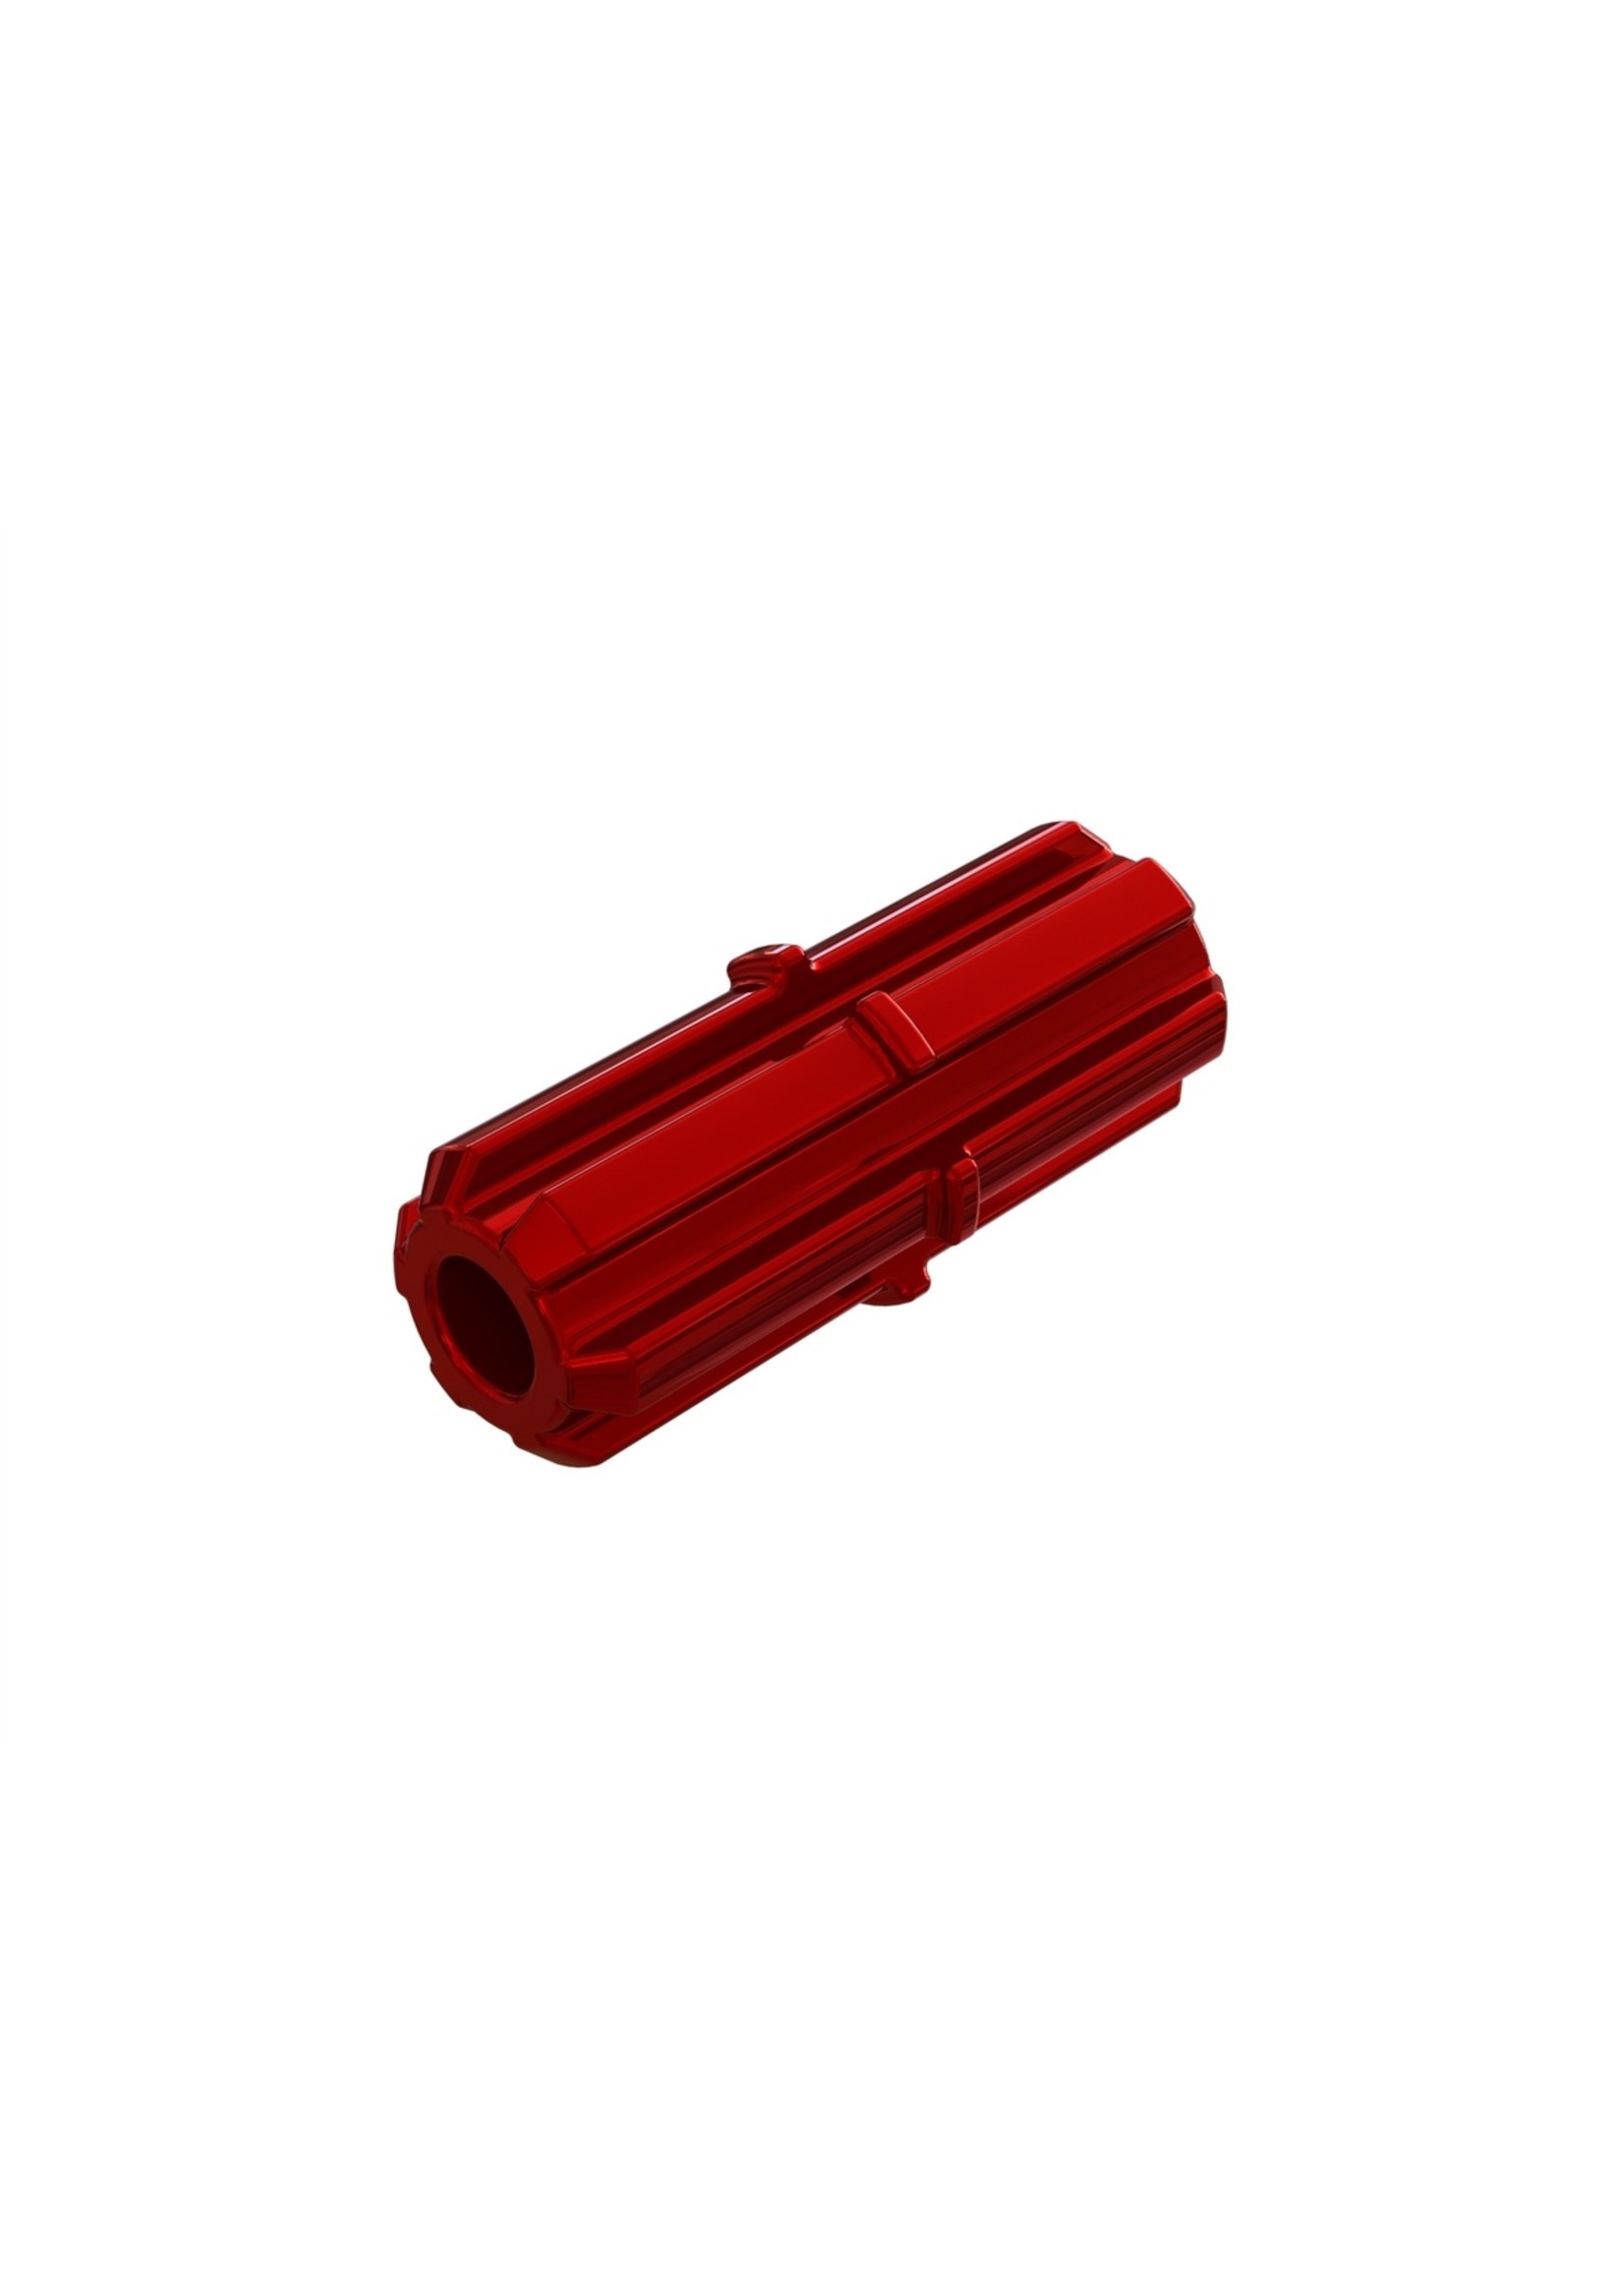 Arrma AR310881 - Slipper Shaft - Red